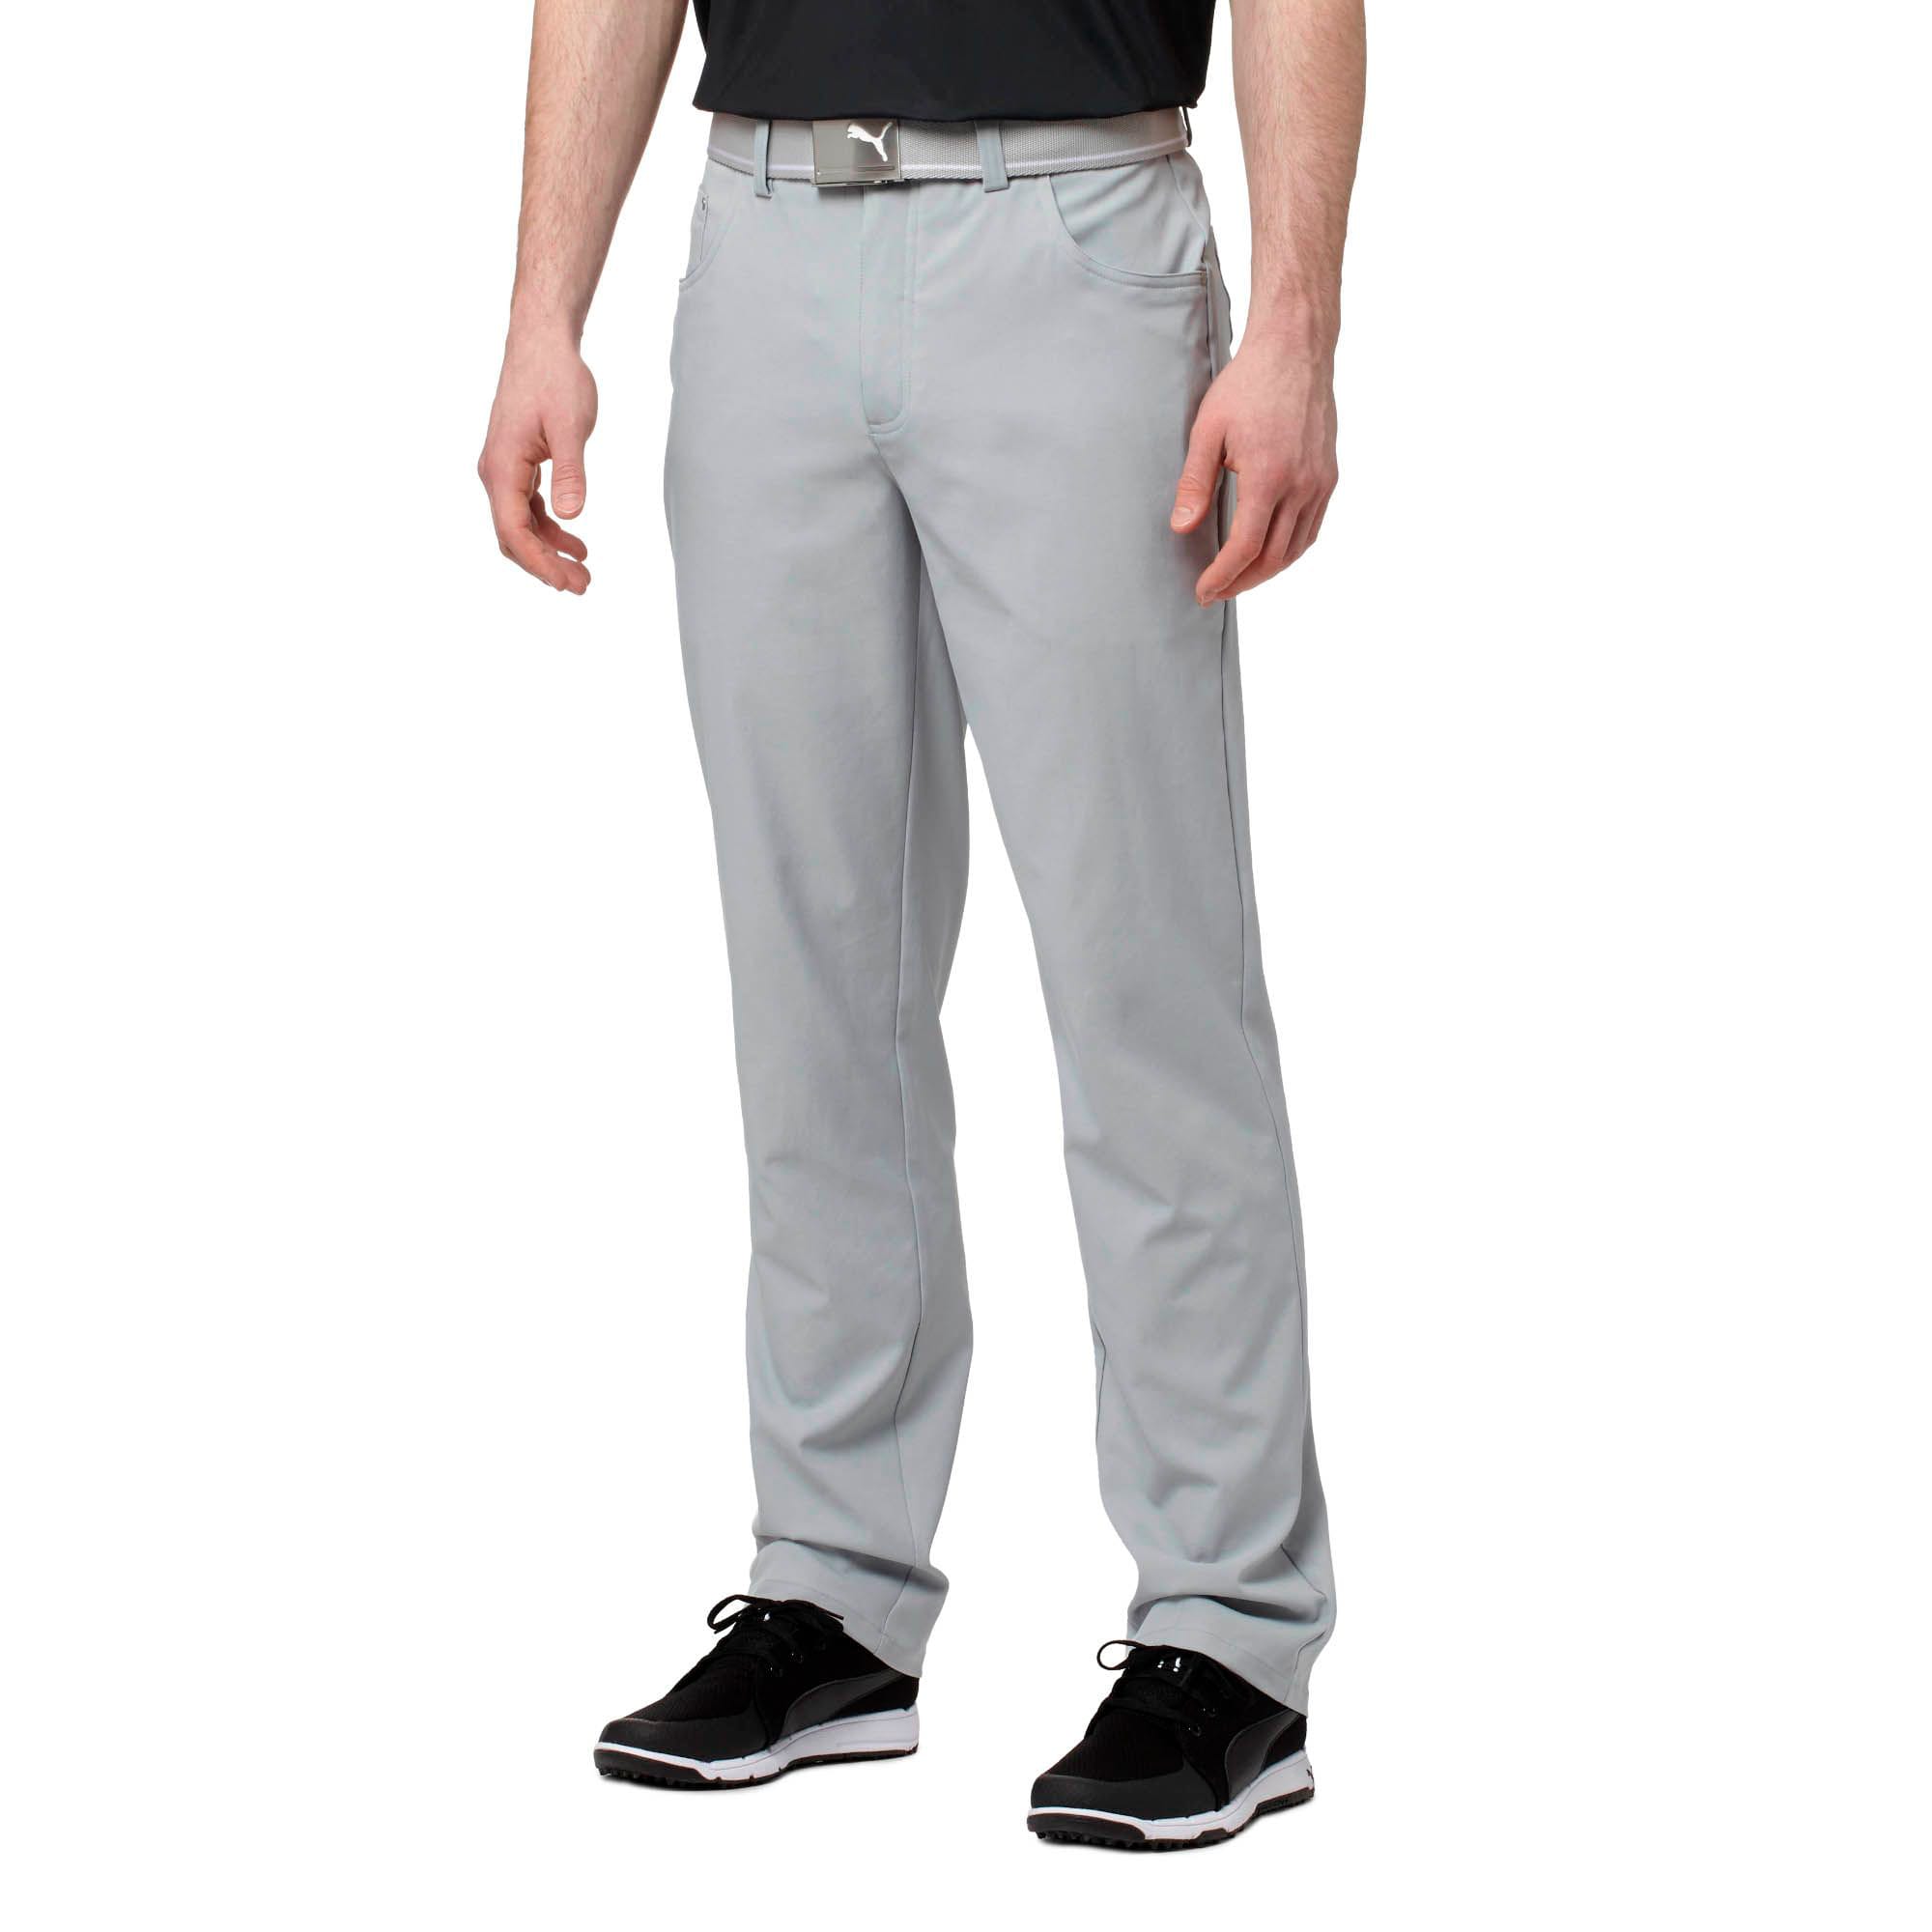 6 pocket golf pants